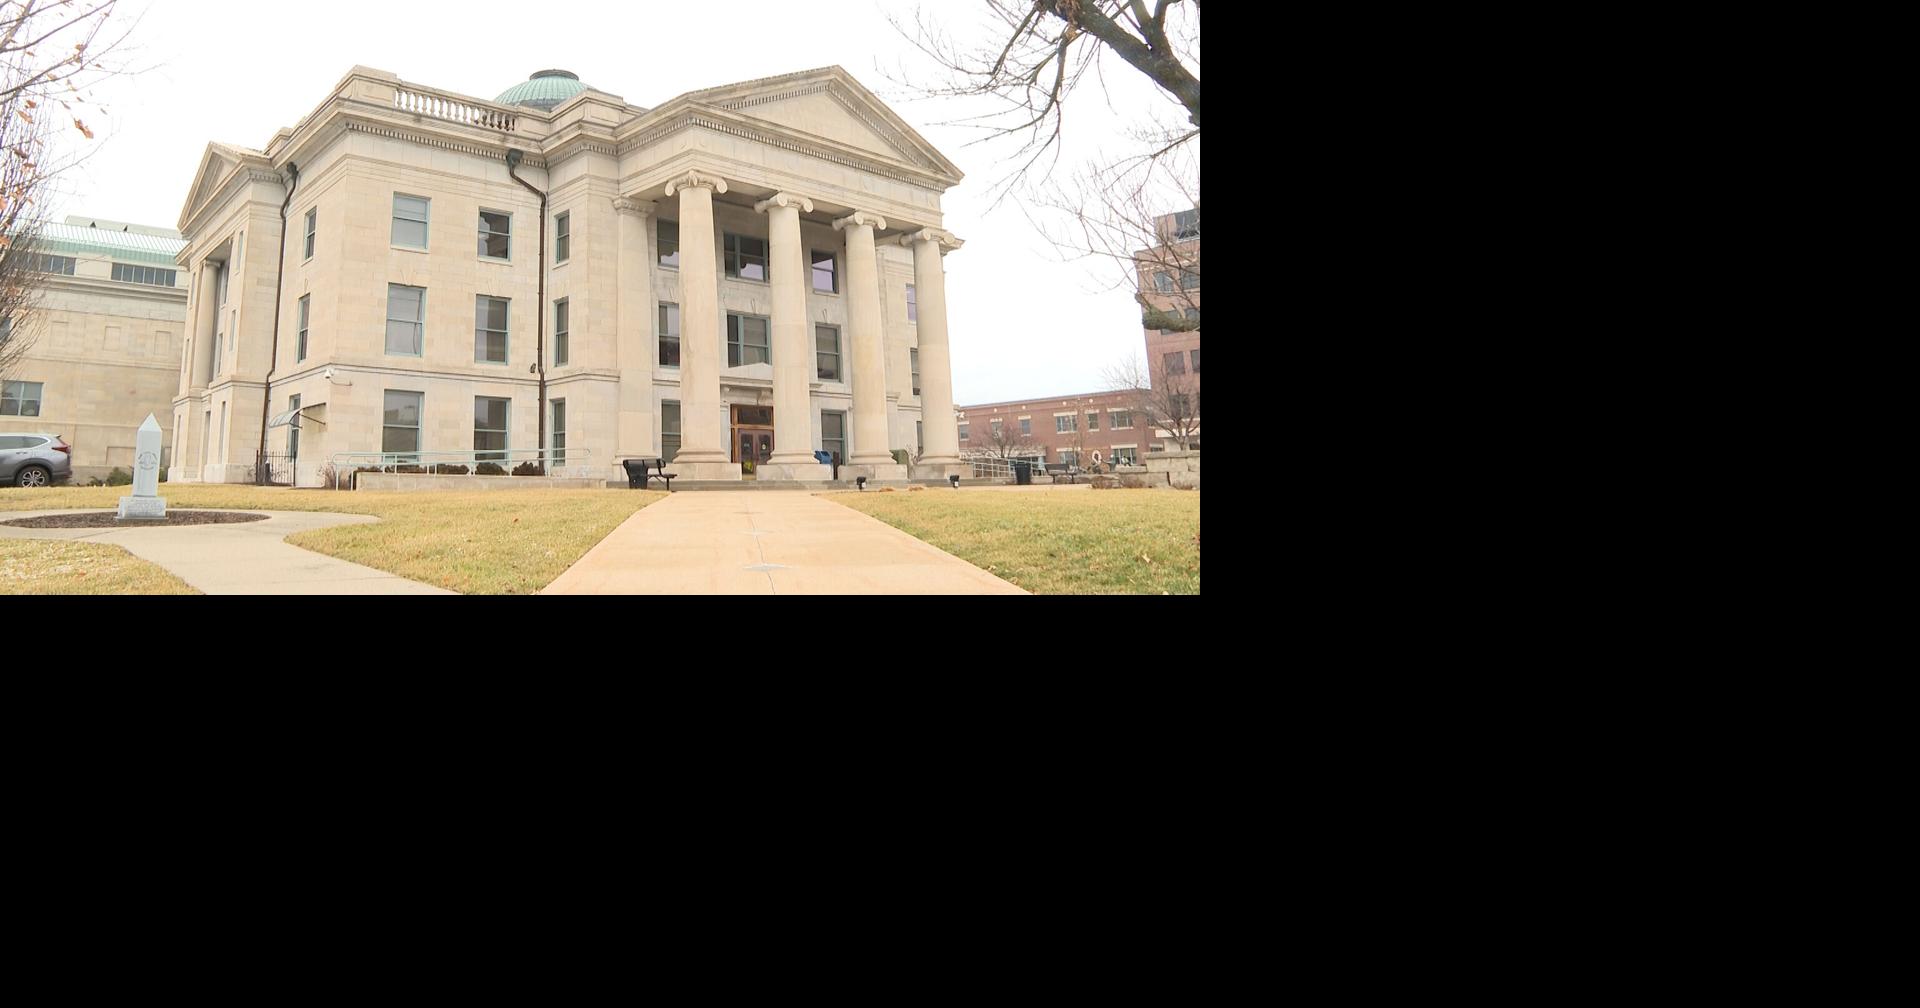 Missouri Senate bill aims to protect judicial information